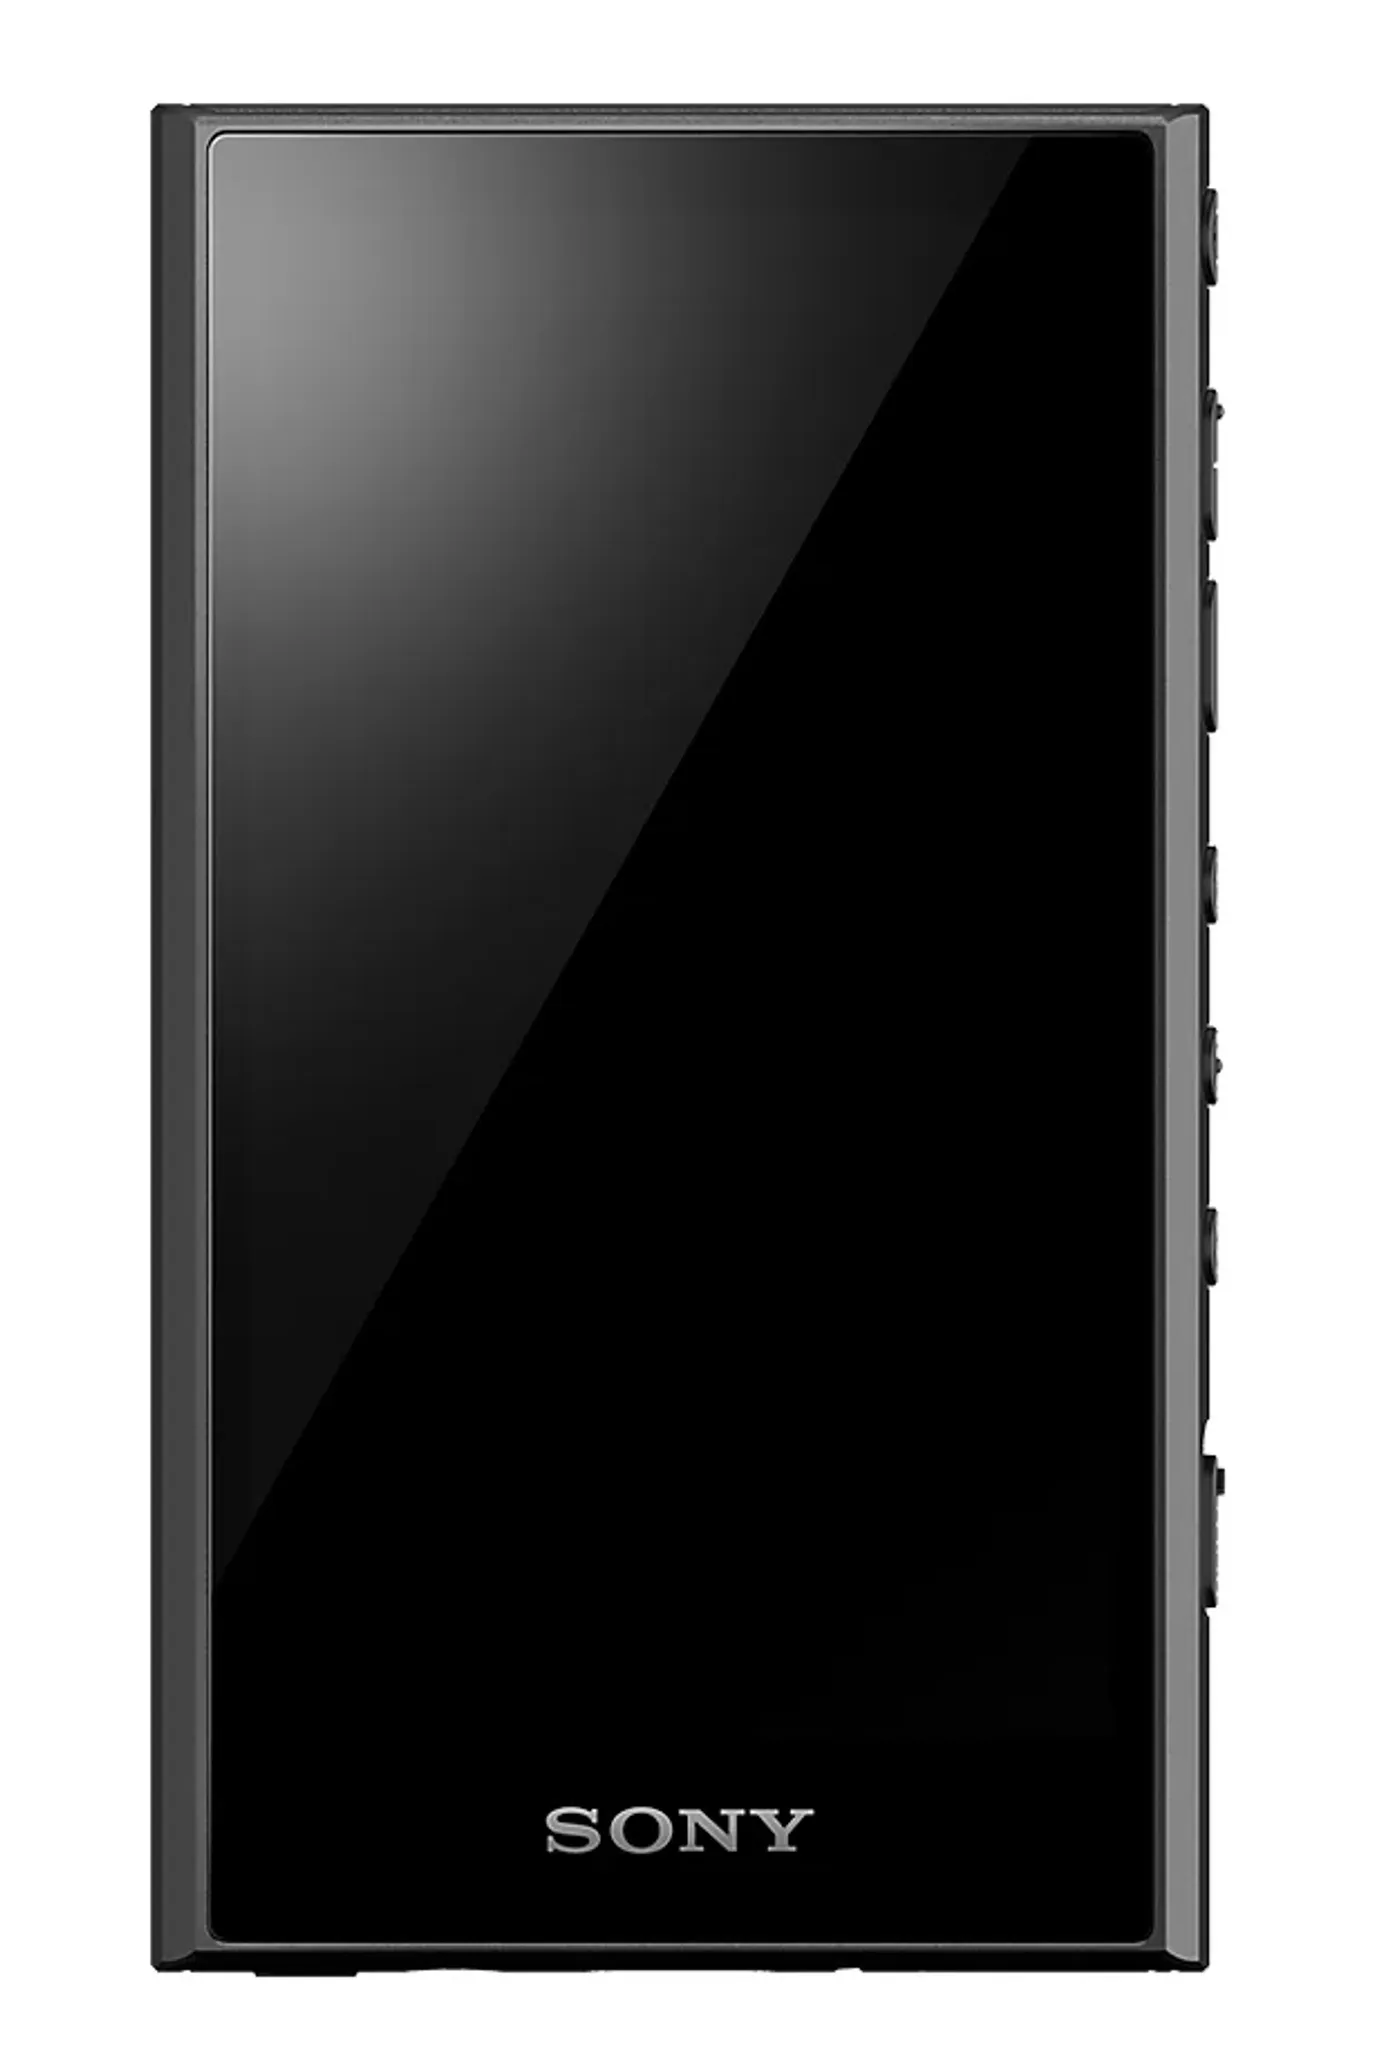 Sony Walkman NW-A306 Touchscreen MP3 Player